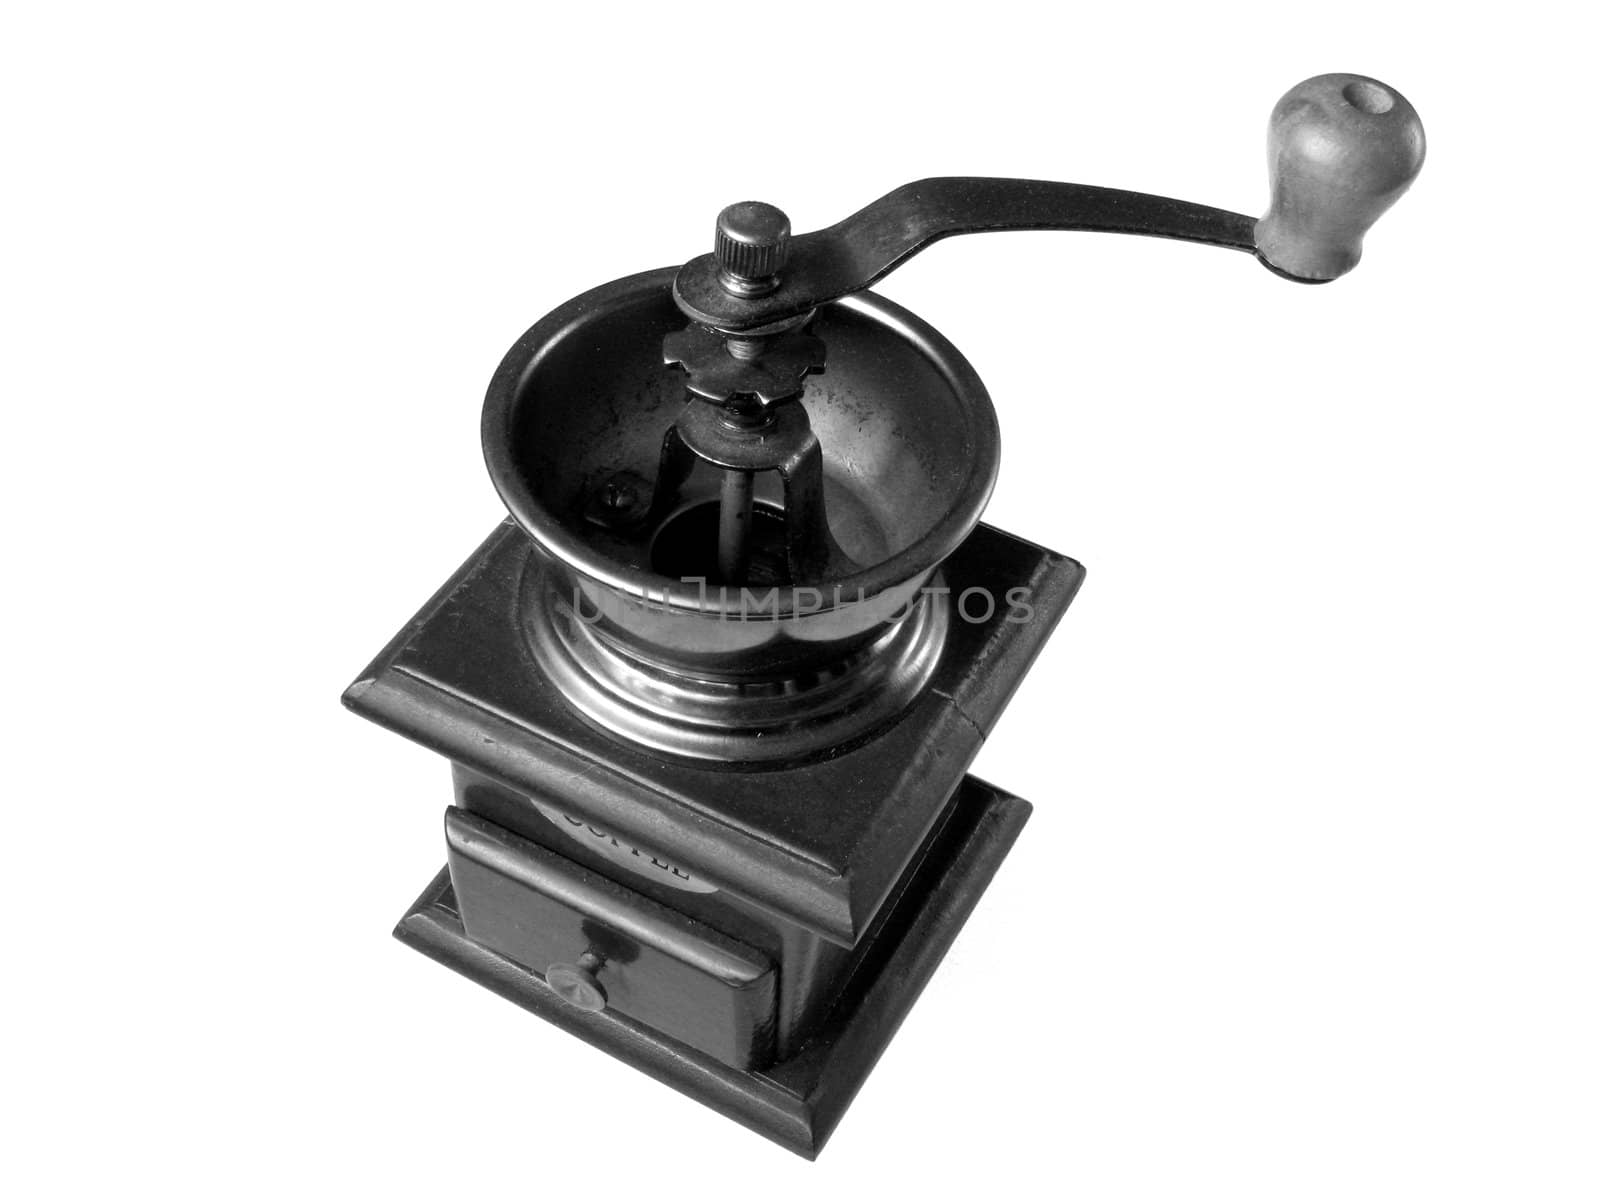 Old coffee grinder. B&W